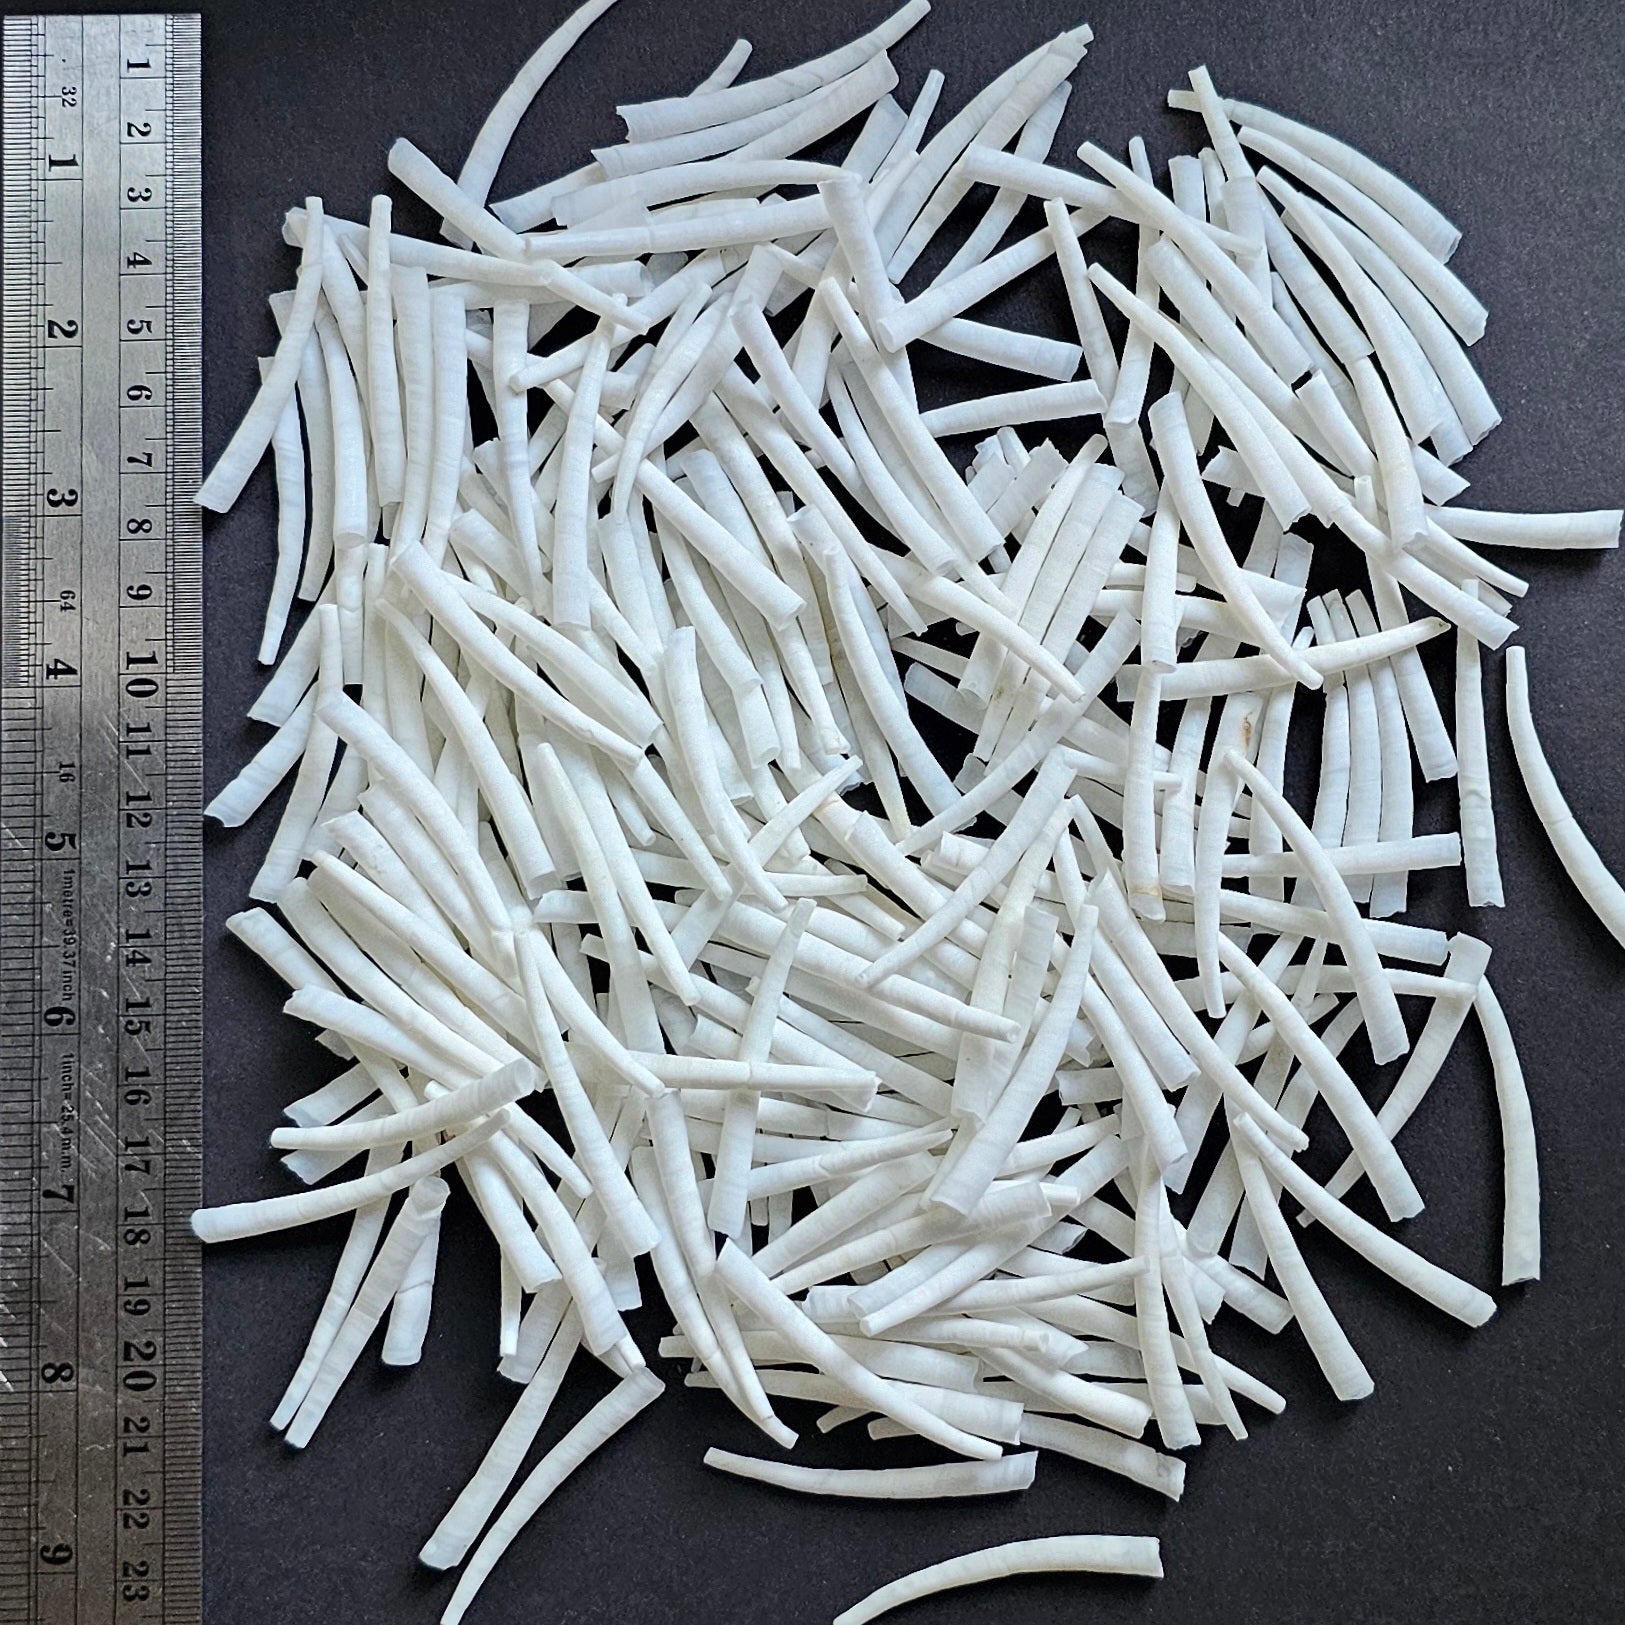 1.75-2" Smooth Dentalium Shells - 250 grams